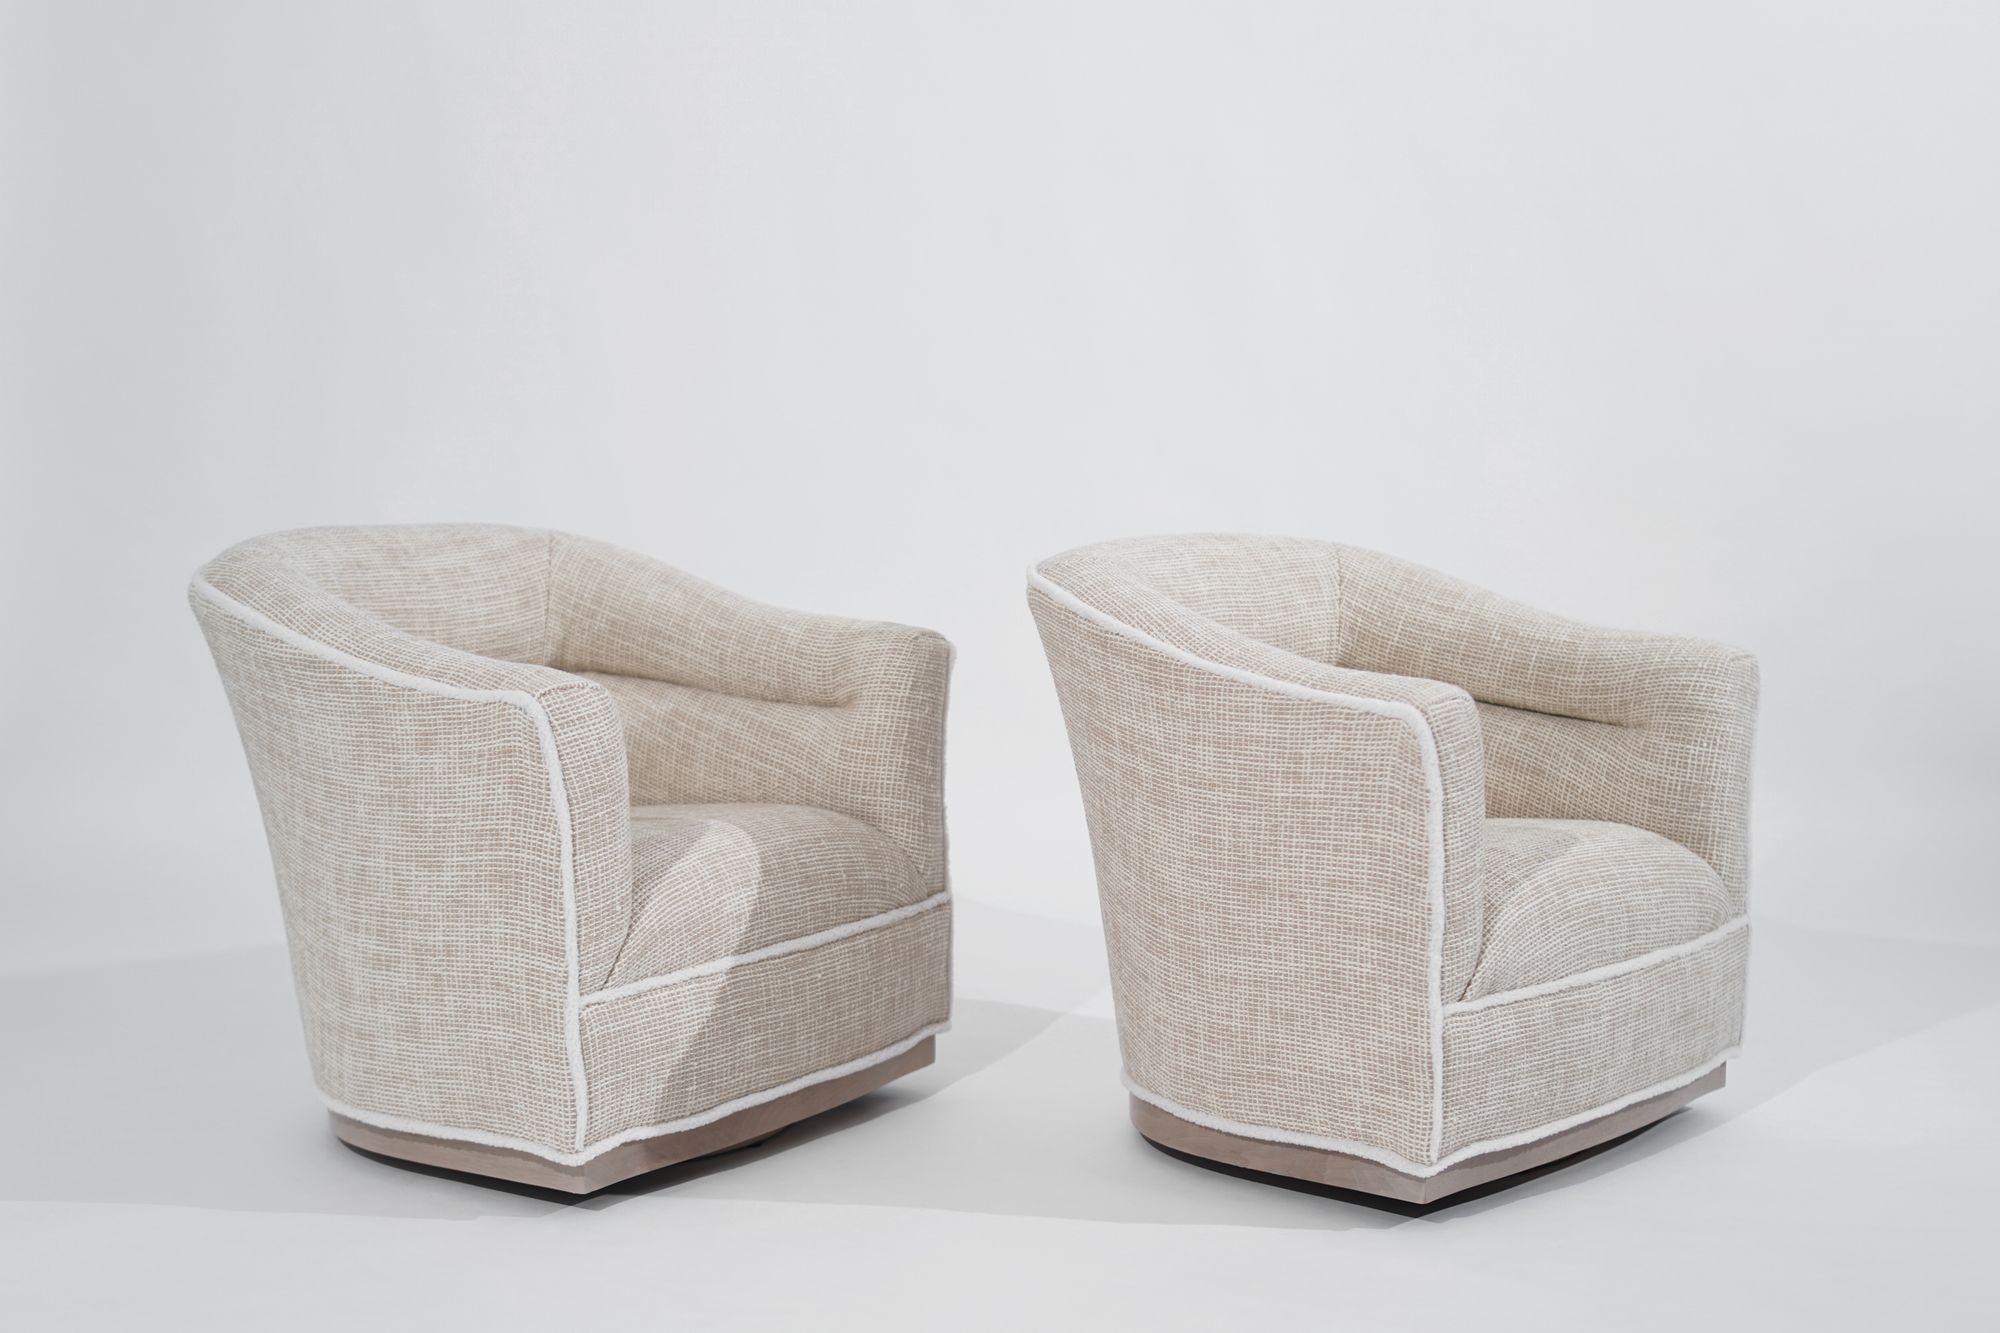 Scandinavian Modern Scandinavian-Modern Swivel Chairs, Sweden, C. 1950s For Sale